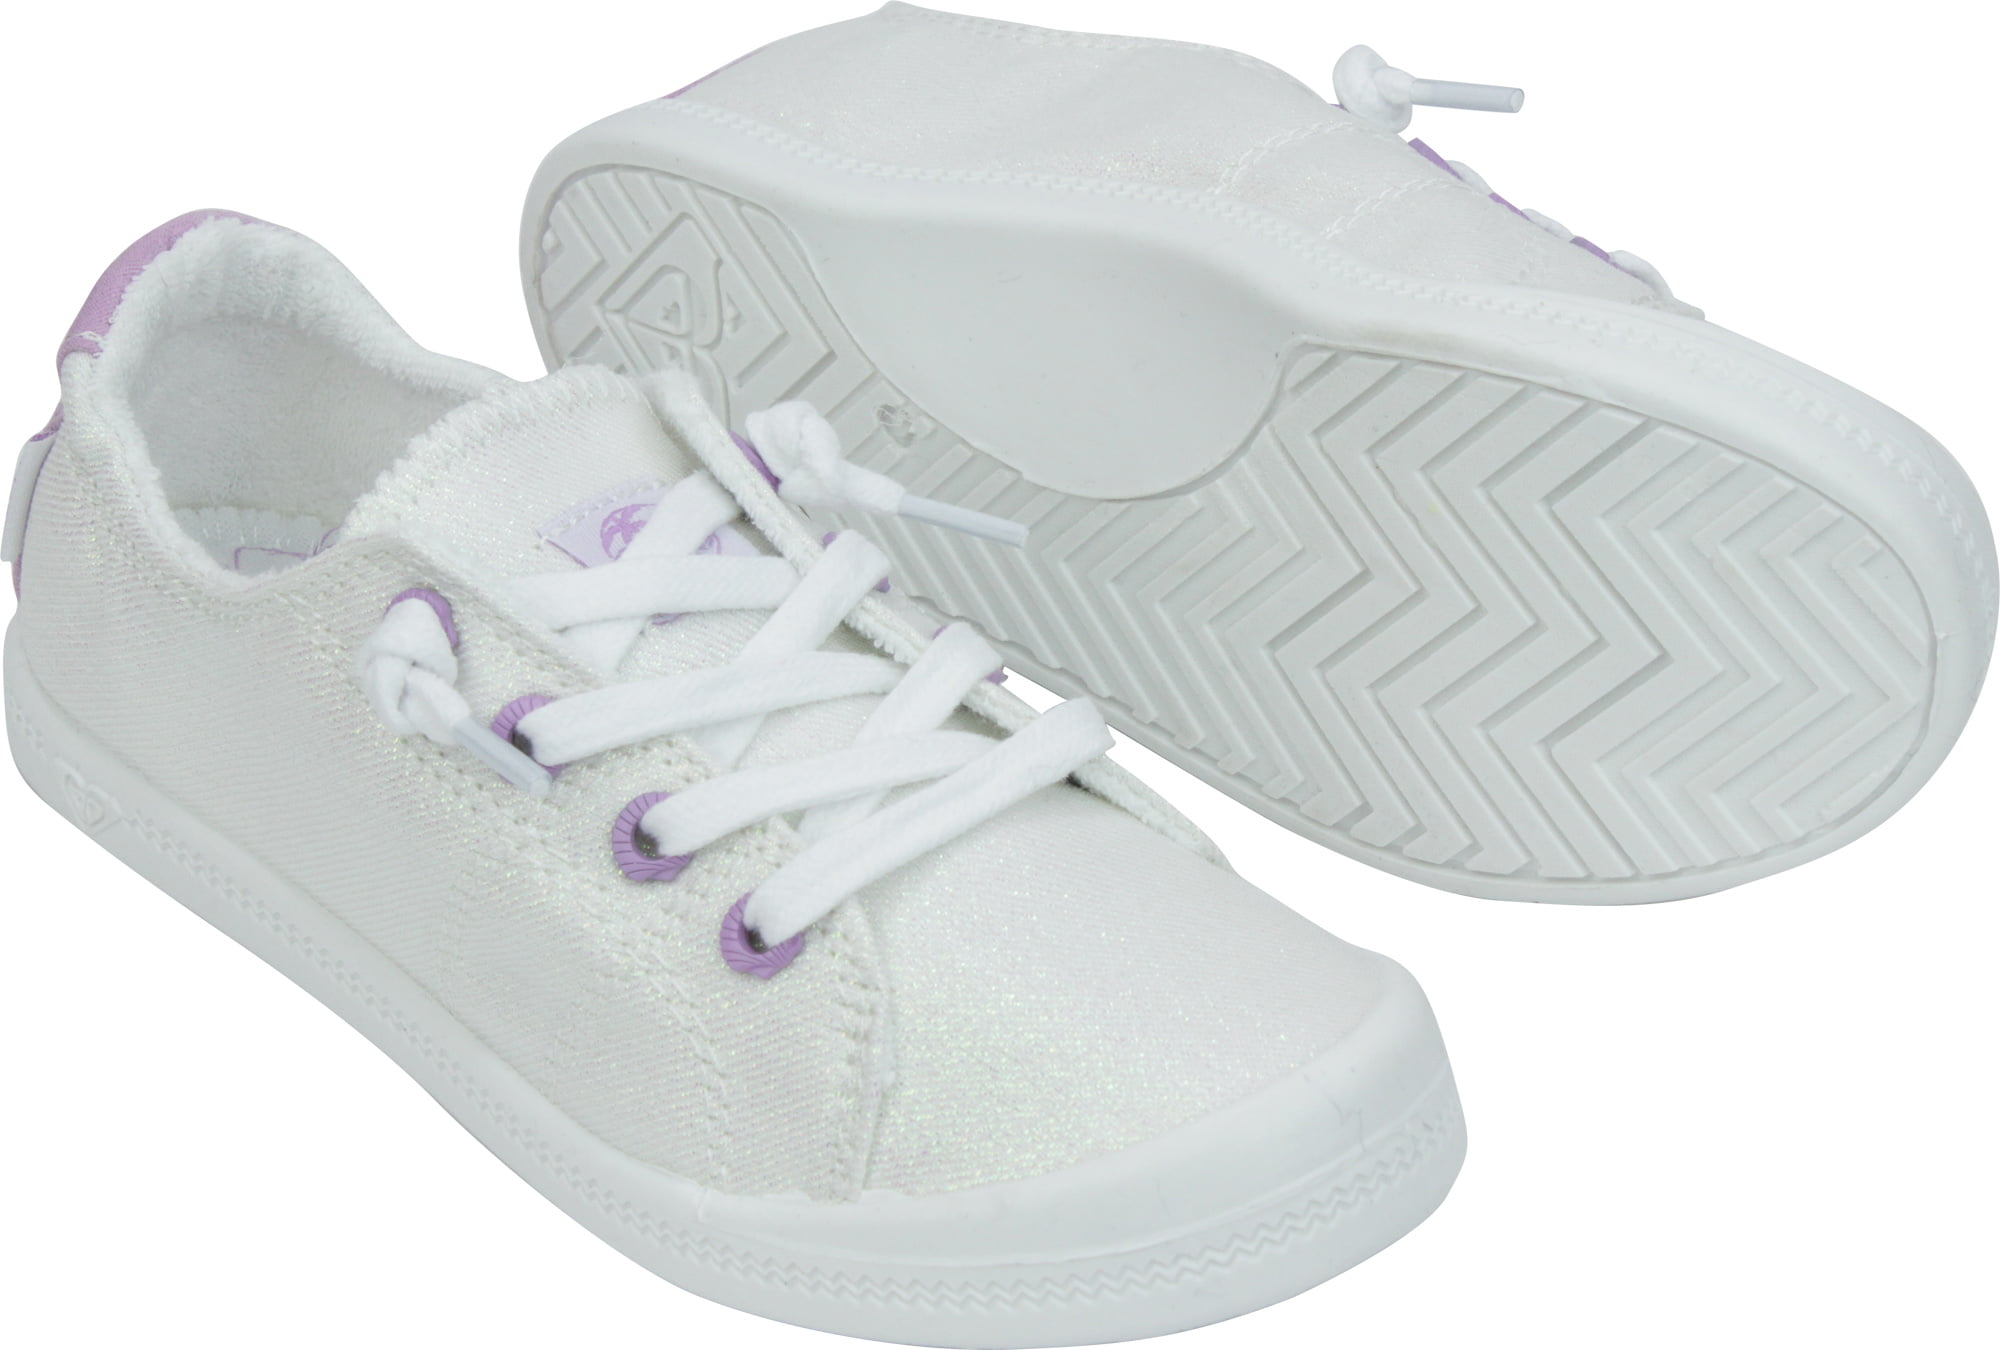 white roxy sneakers